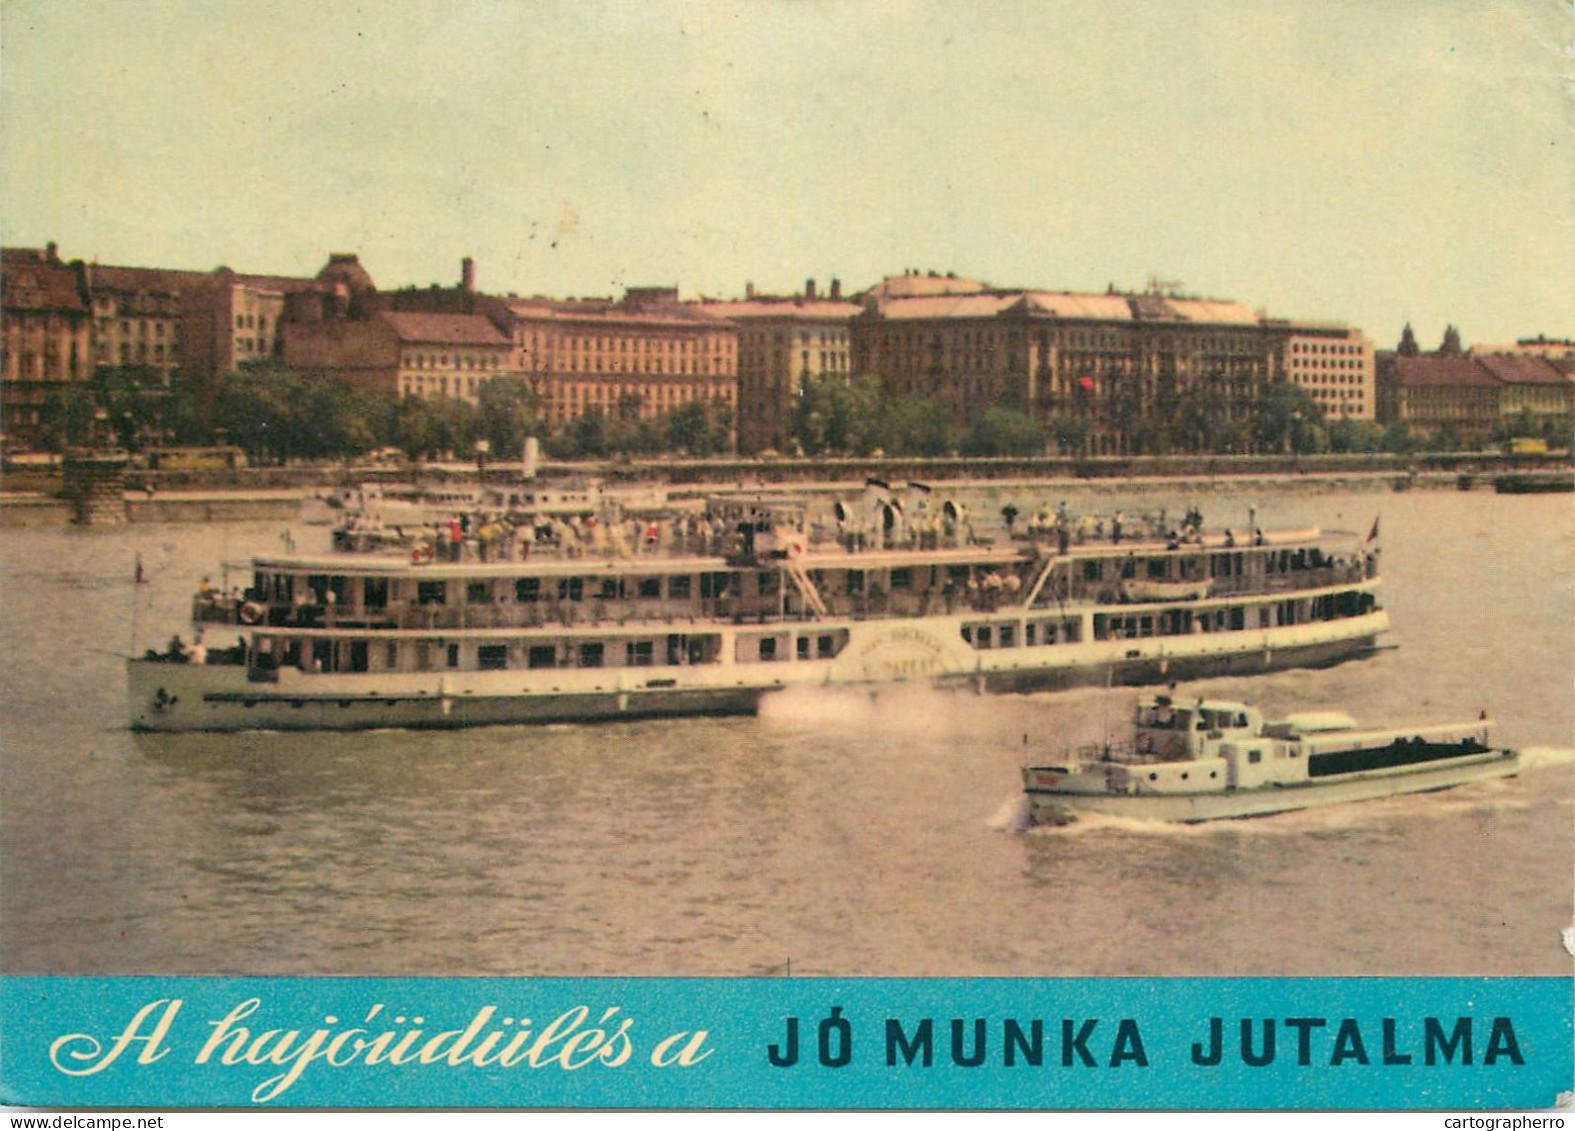 Navigation Sailing Vessels & Boats Themed Postcard Jomunka Jutalma Paddle Cruiser - Sailing Vessels